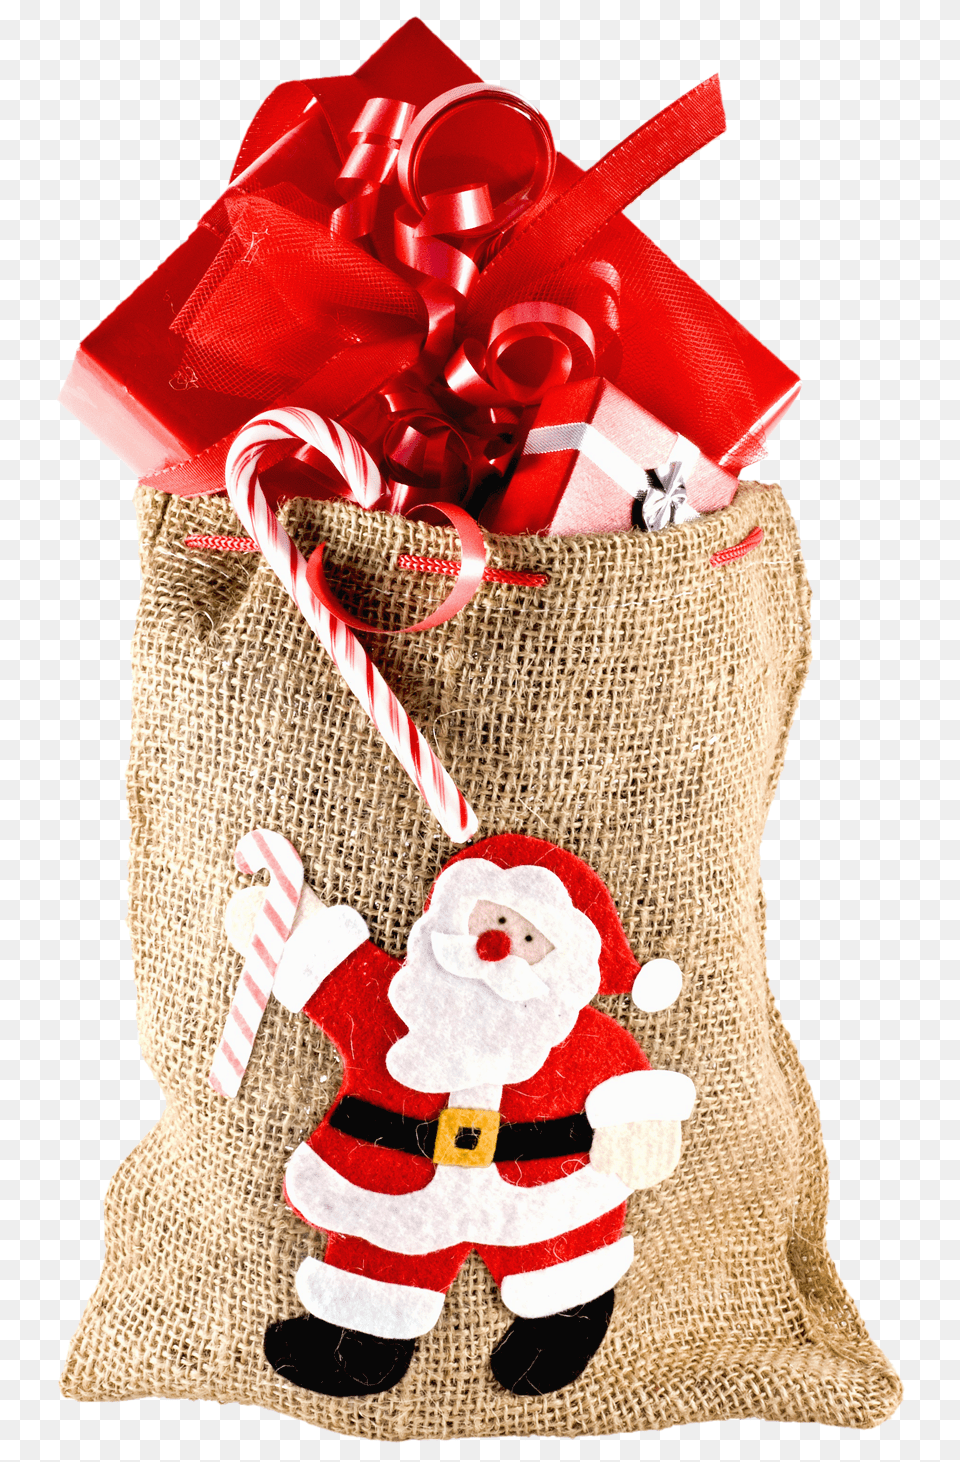 Pngpix Com Christmas Sack Gift Transparent Bag, Baby, Person, Clothing Png Image